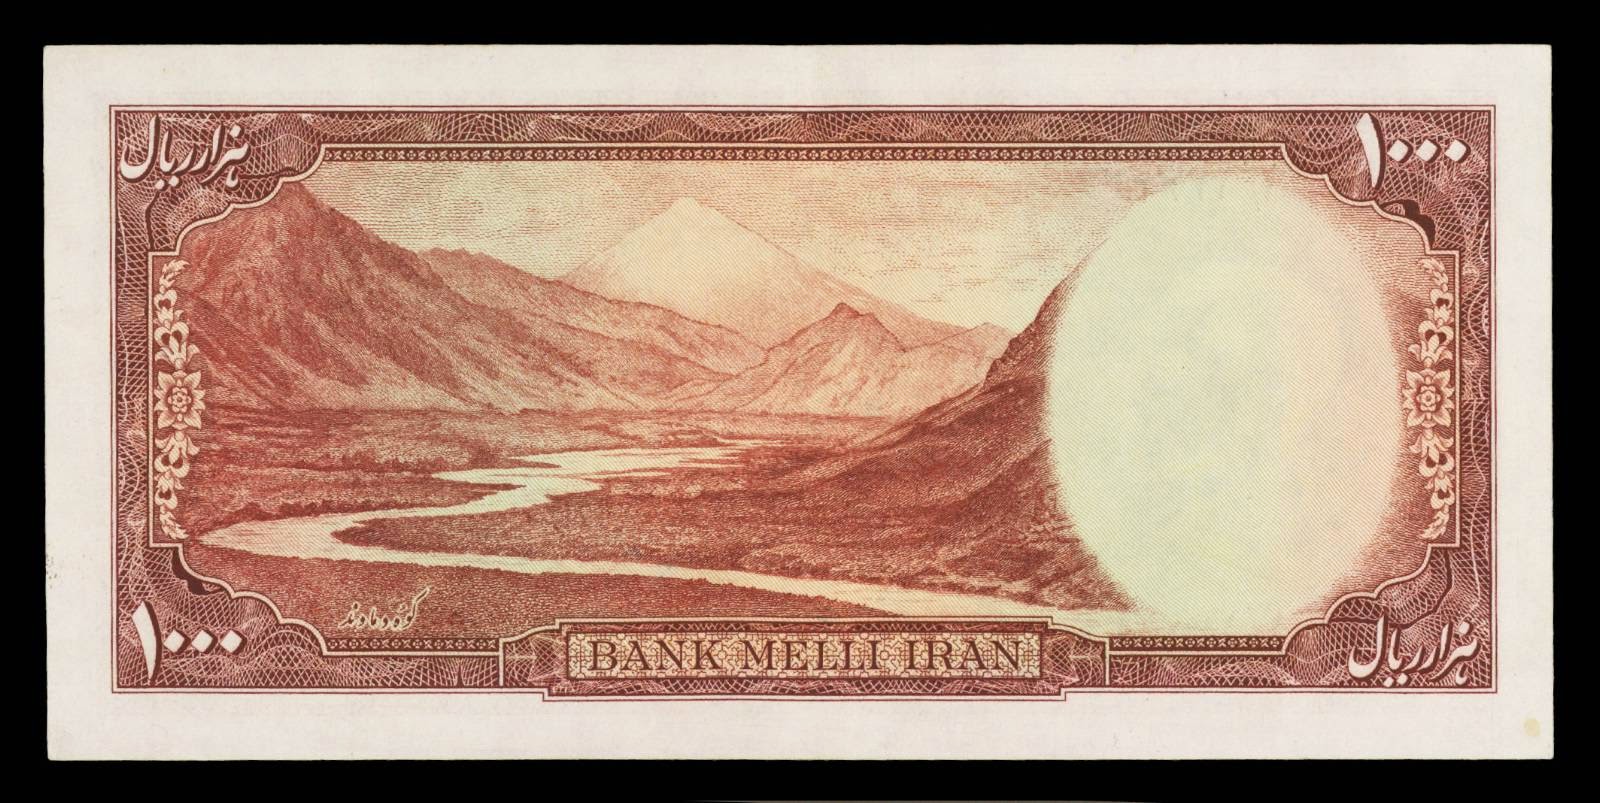 Iran 1000 Rials note 1951 Mount Damavand & Jajrood River